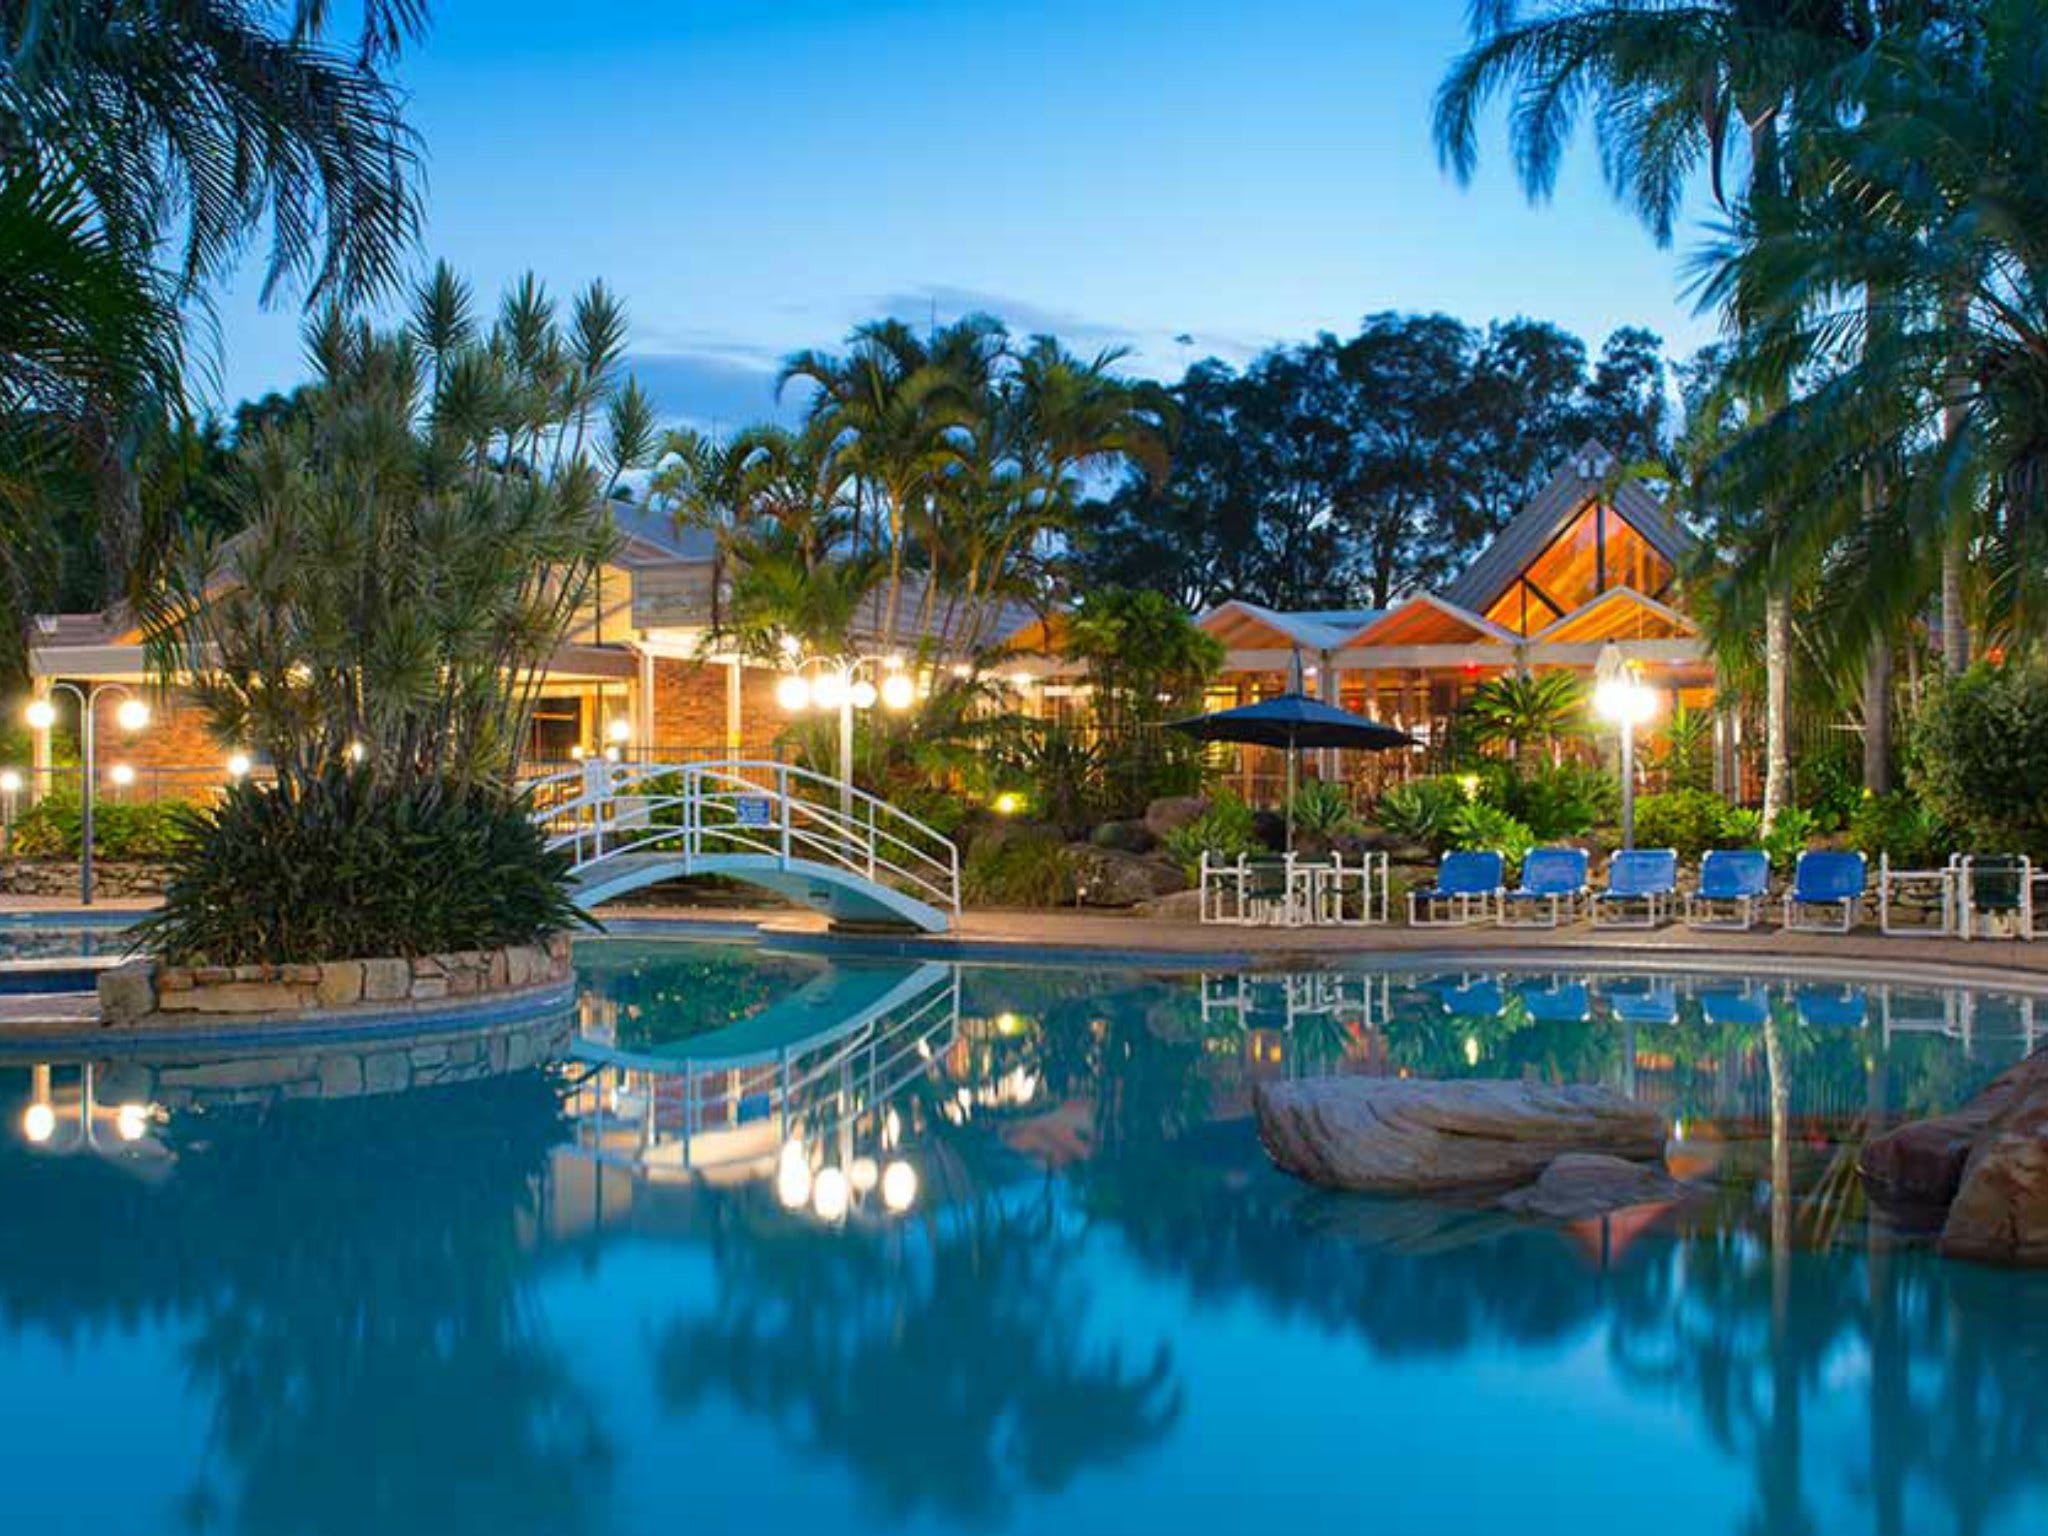 Boambee Bay Resort - Accommodation Rockhampton